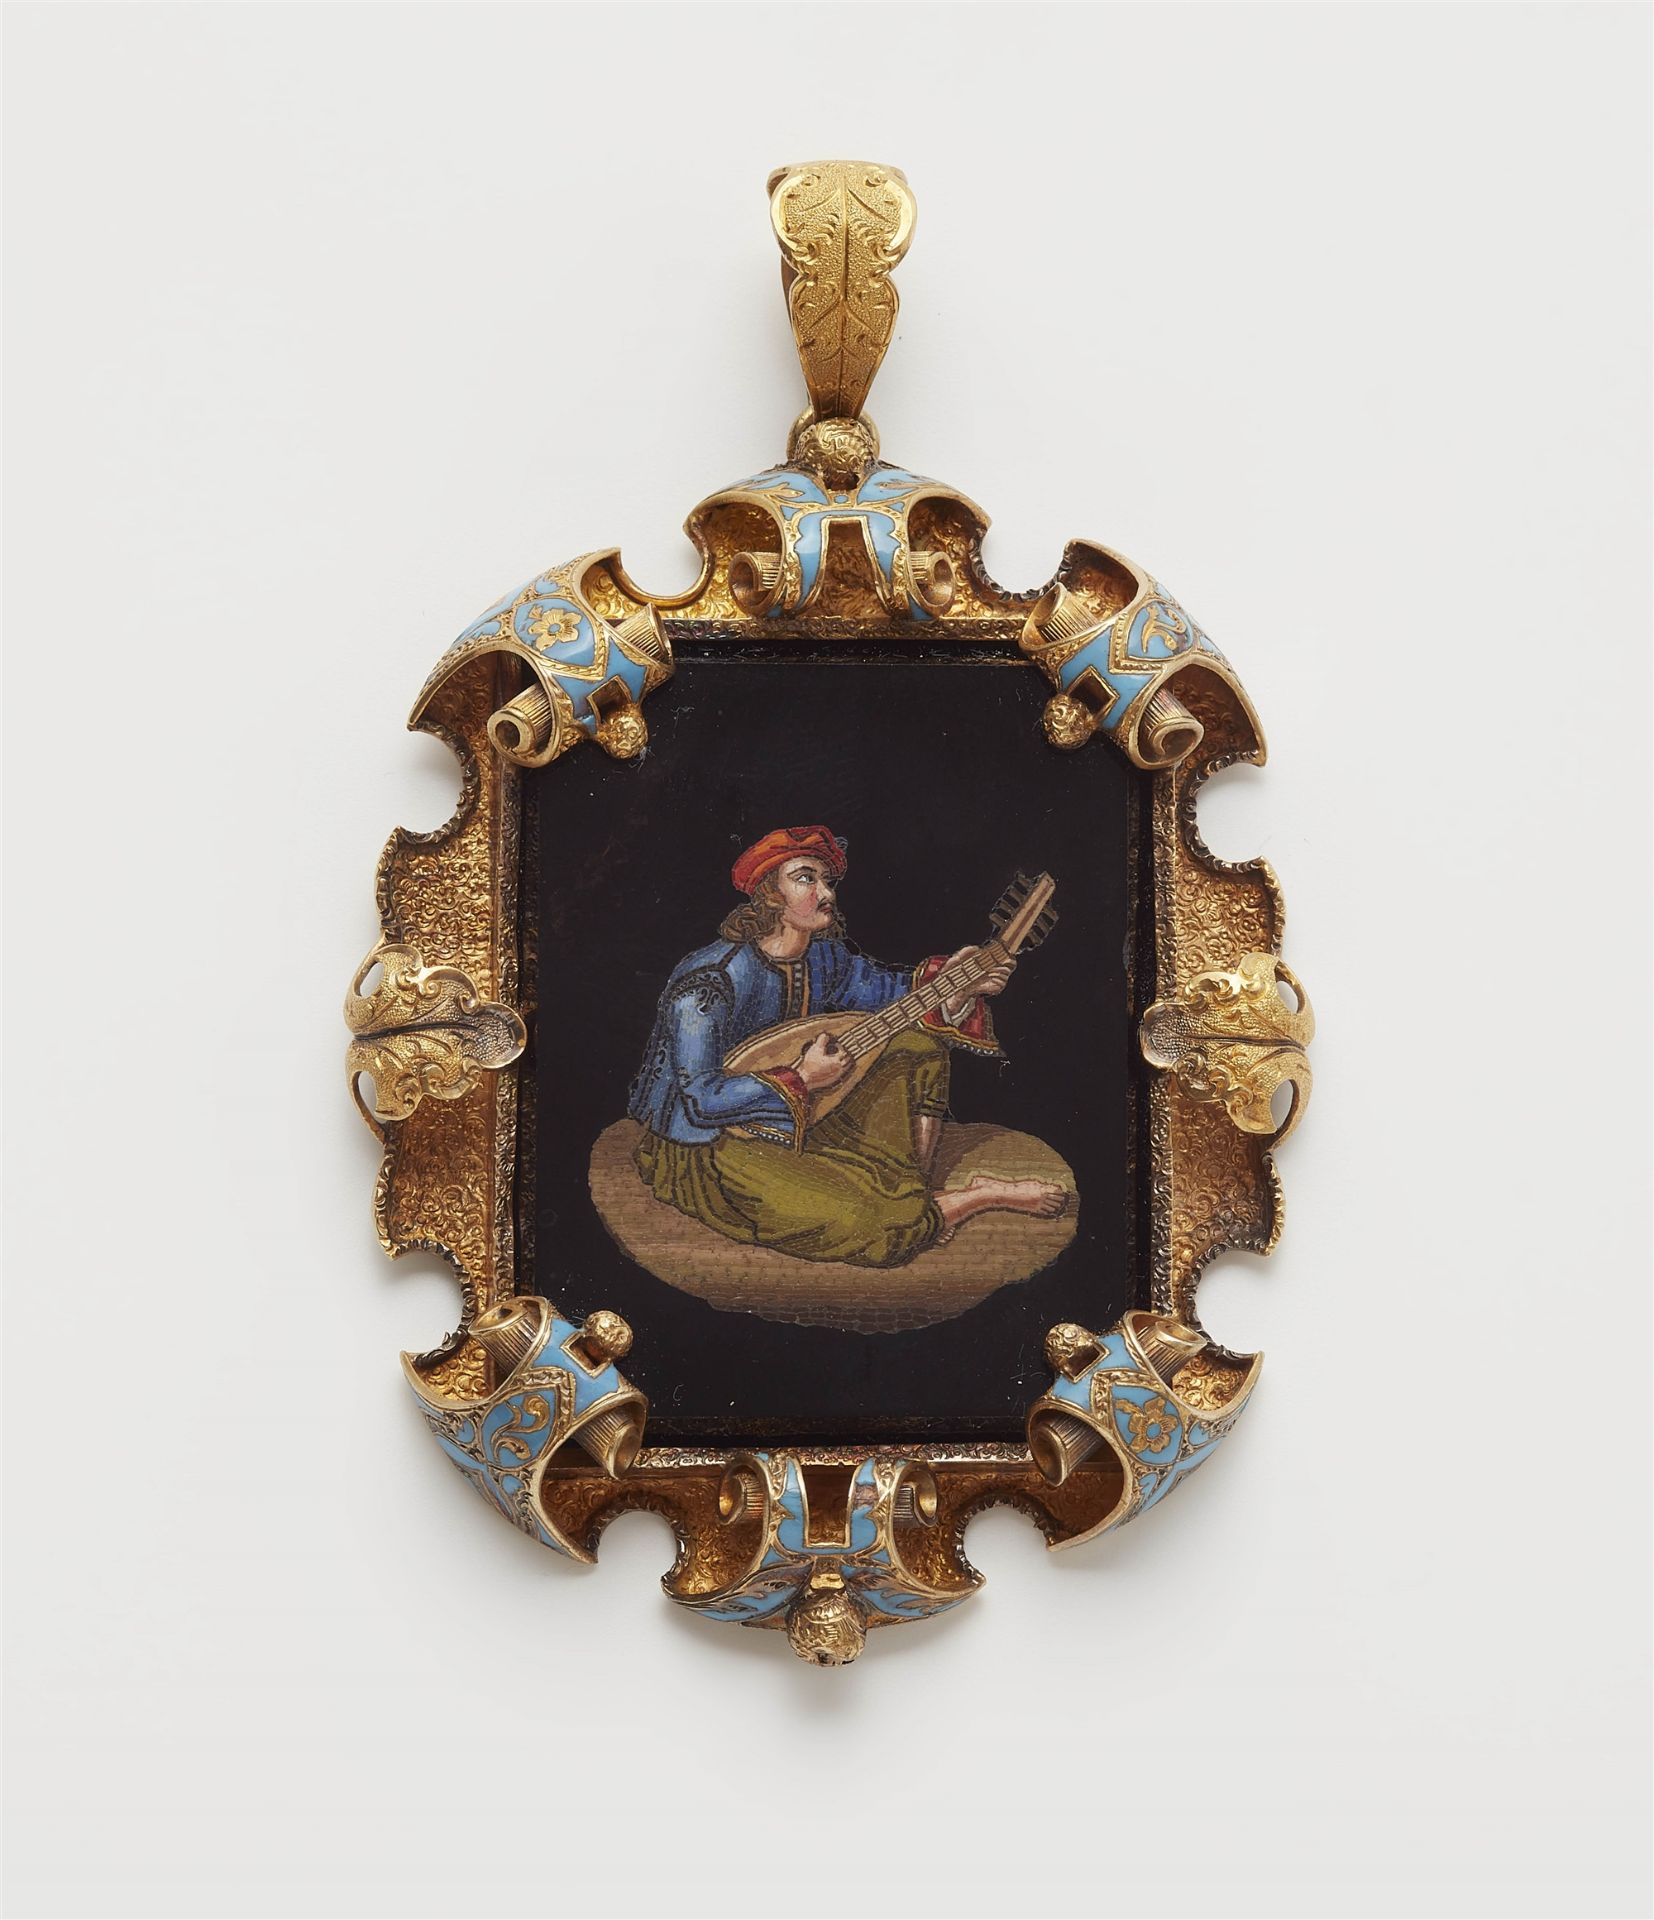 A 14k gold enamel repoussé pendant with a Roman micromosaic depicting a mandolin player in Roman cos